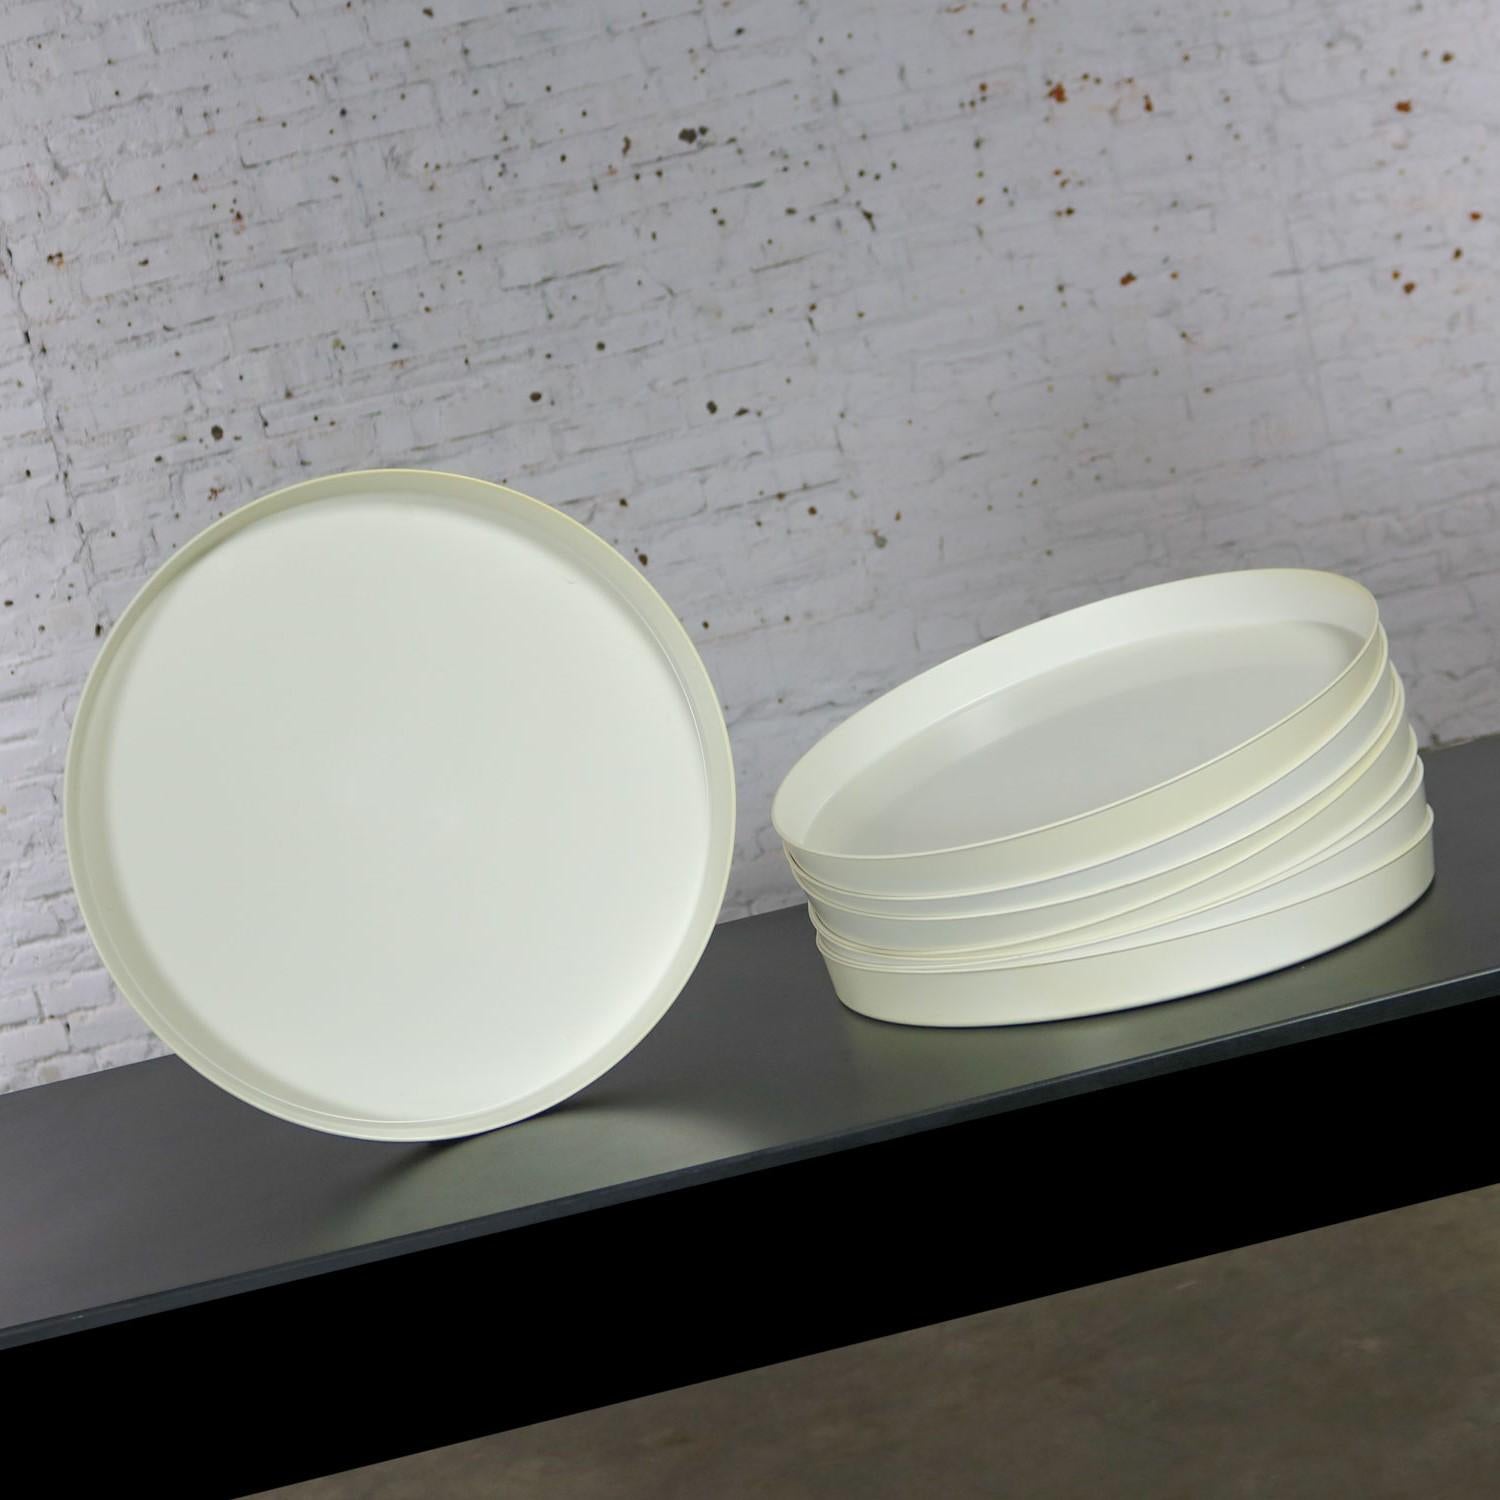 American Mid-Century Modern Trays Round White Plastic Splatter Platters by Sabe’s